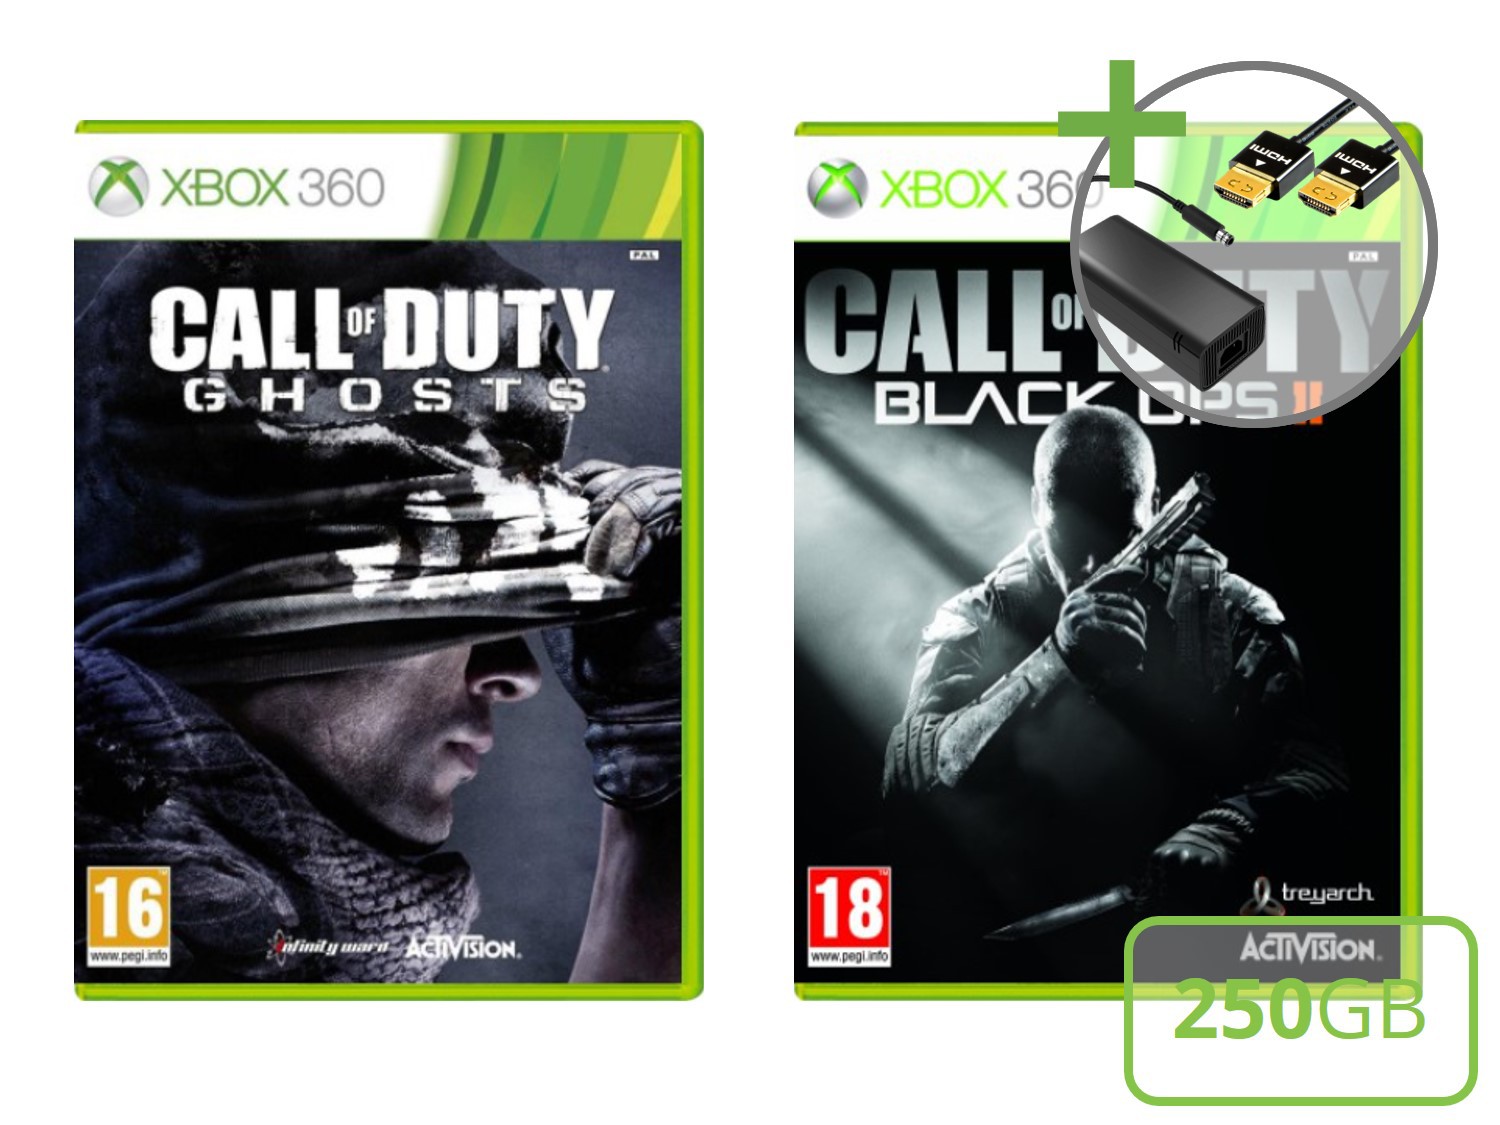 Microsoft Xbox 360 New Slim Starter Pack - 250GB Call of Duty Edition - Xbox 360 Hardware - 5